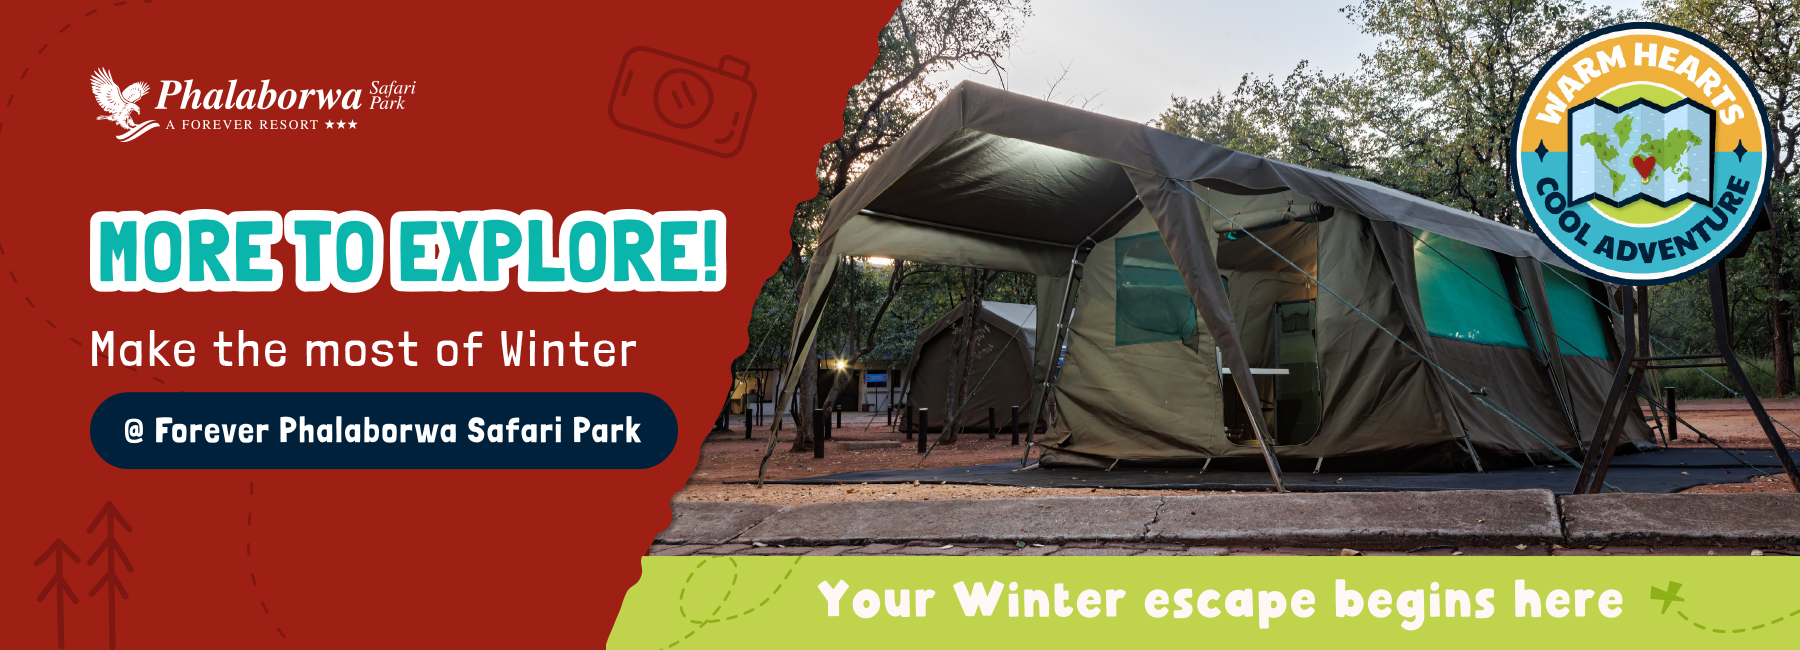 More to explore! Make the most of Winter at Phalborwa Safari Park